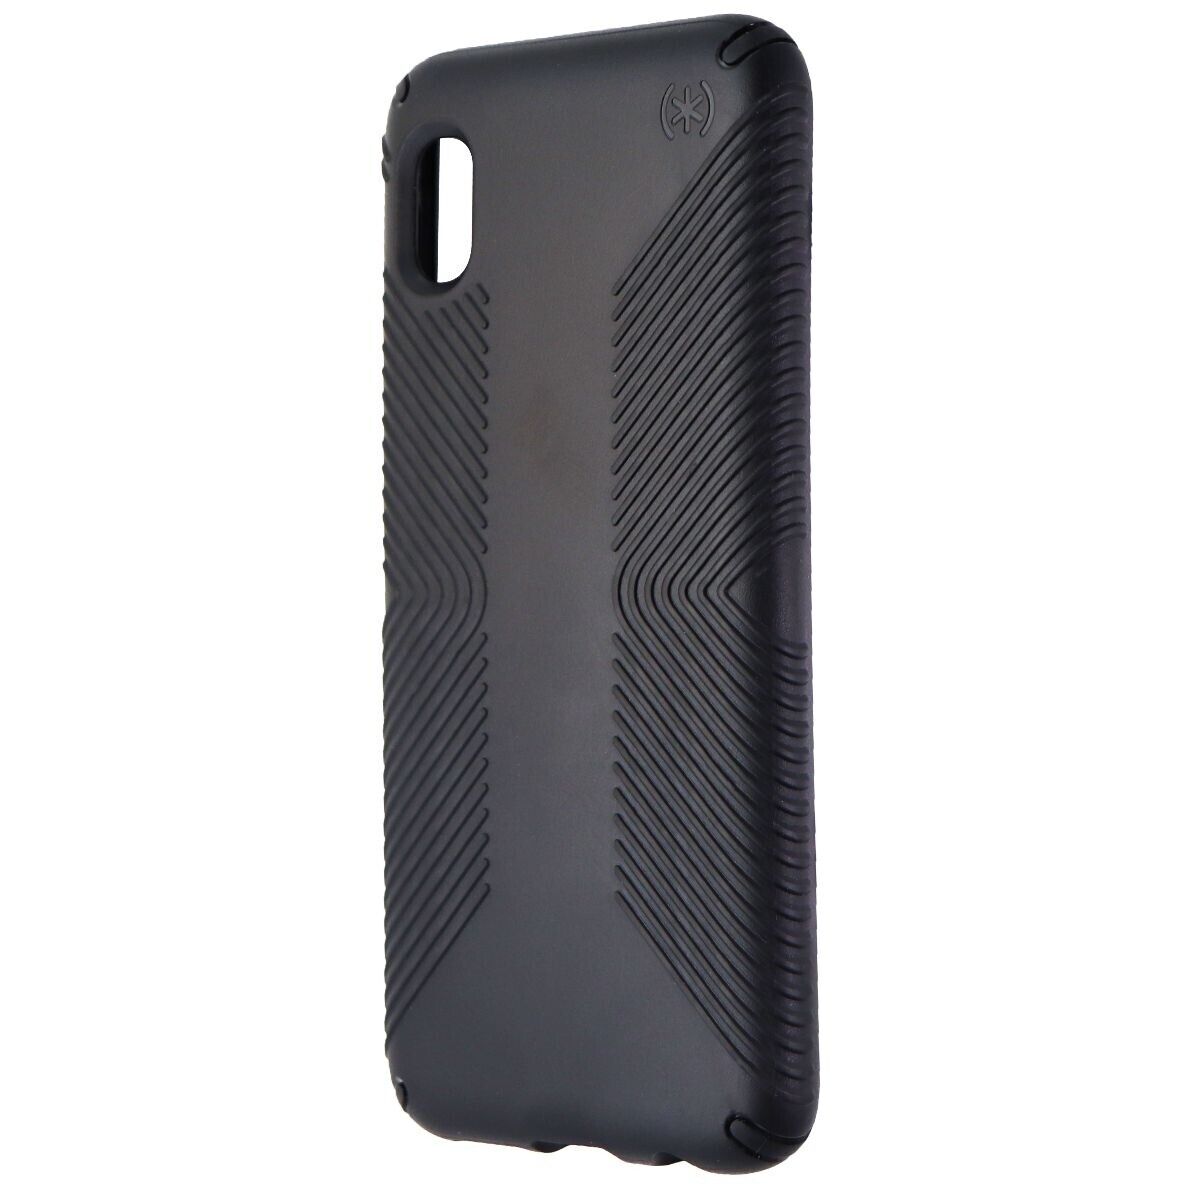 Samsung Galaxy A10e Speck Grip Case - Black